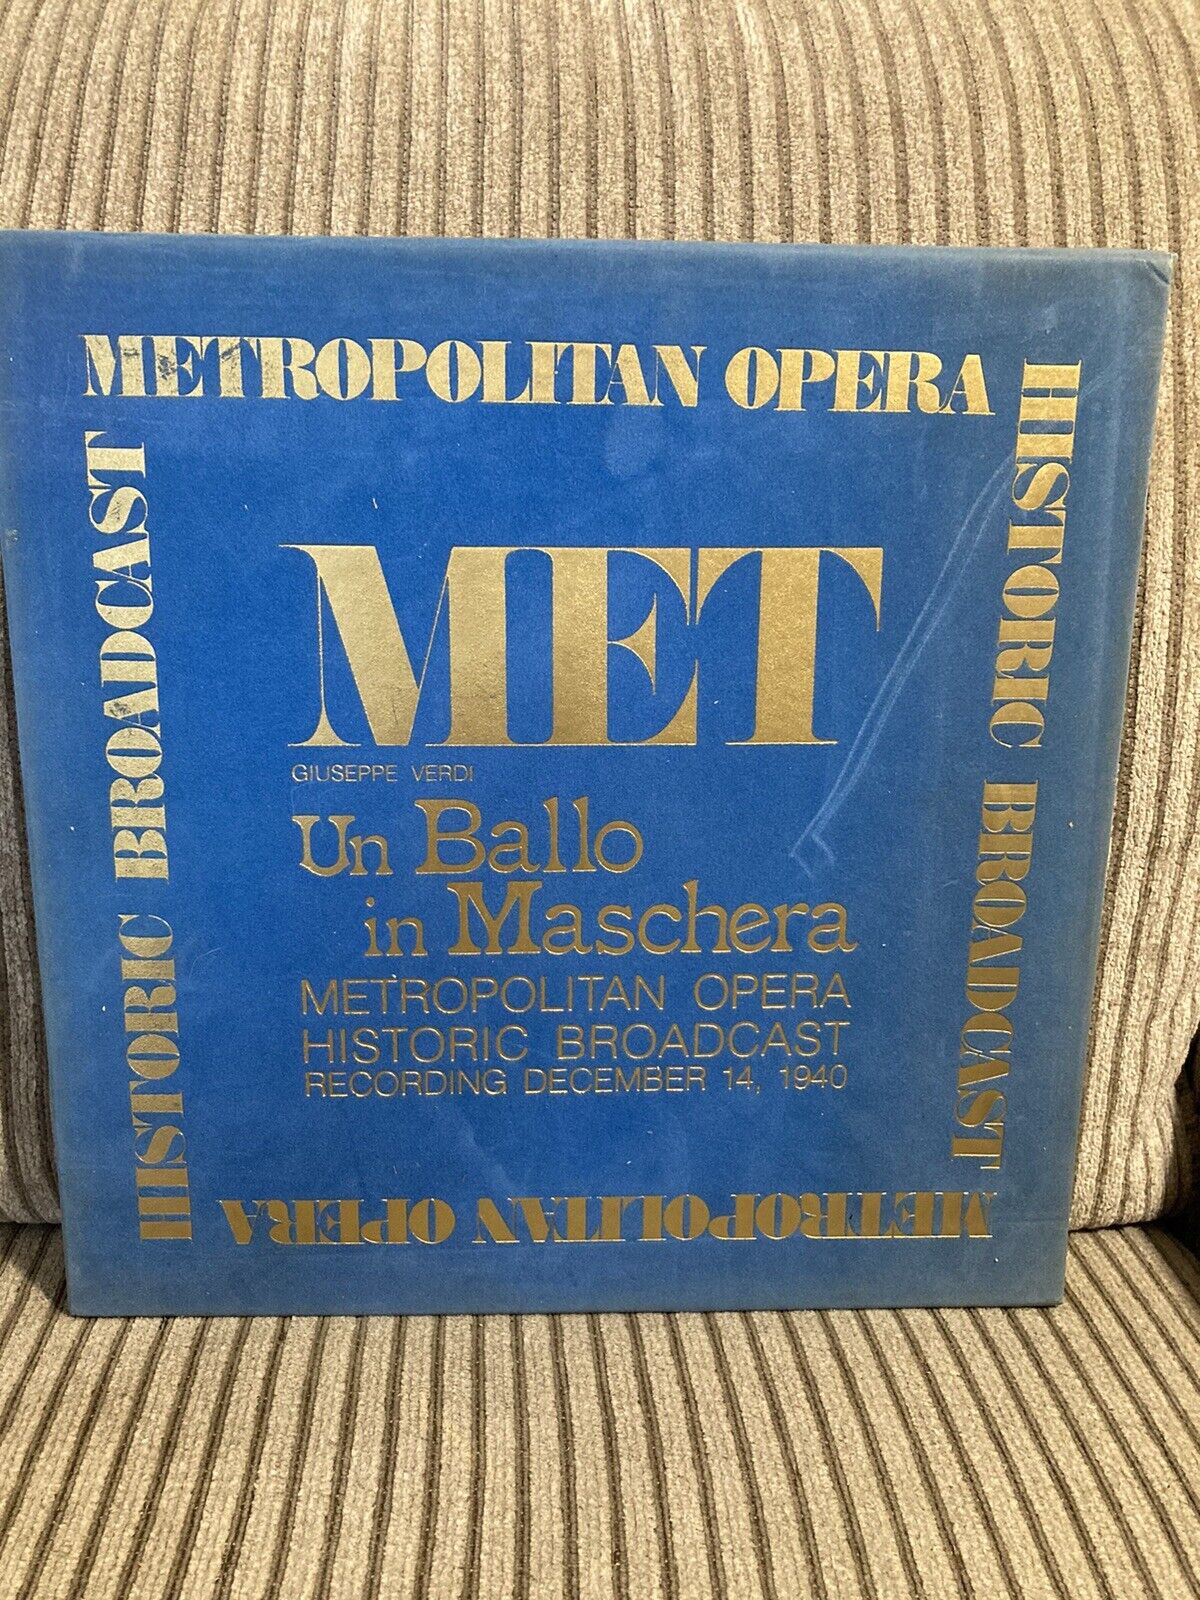 Metropolitan Opera Historic Broadcast Un Ballo in Maschera LP Set Vintage 1940